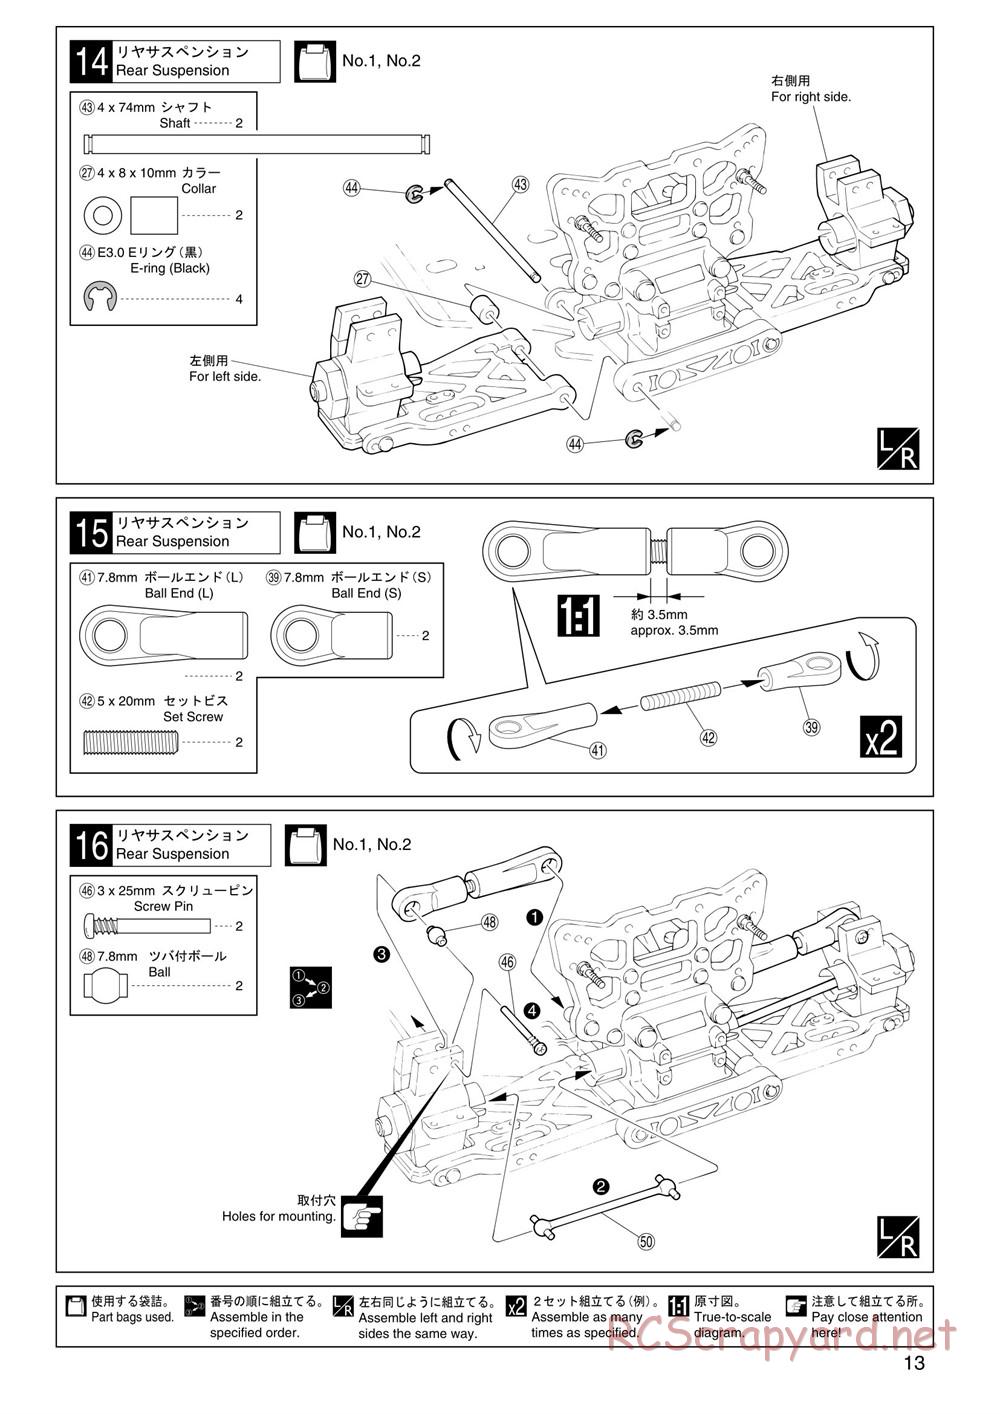 Kyosho - Super Eight GP20 Landmax 2 - Manual - Page 13